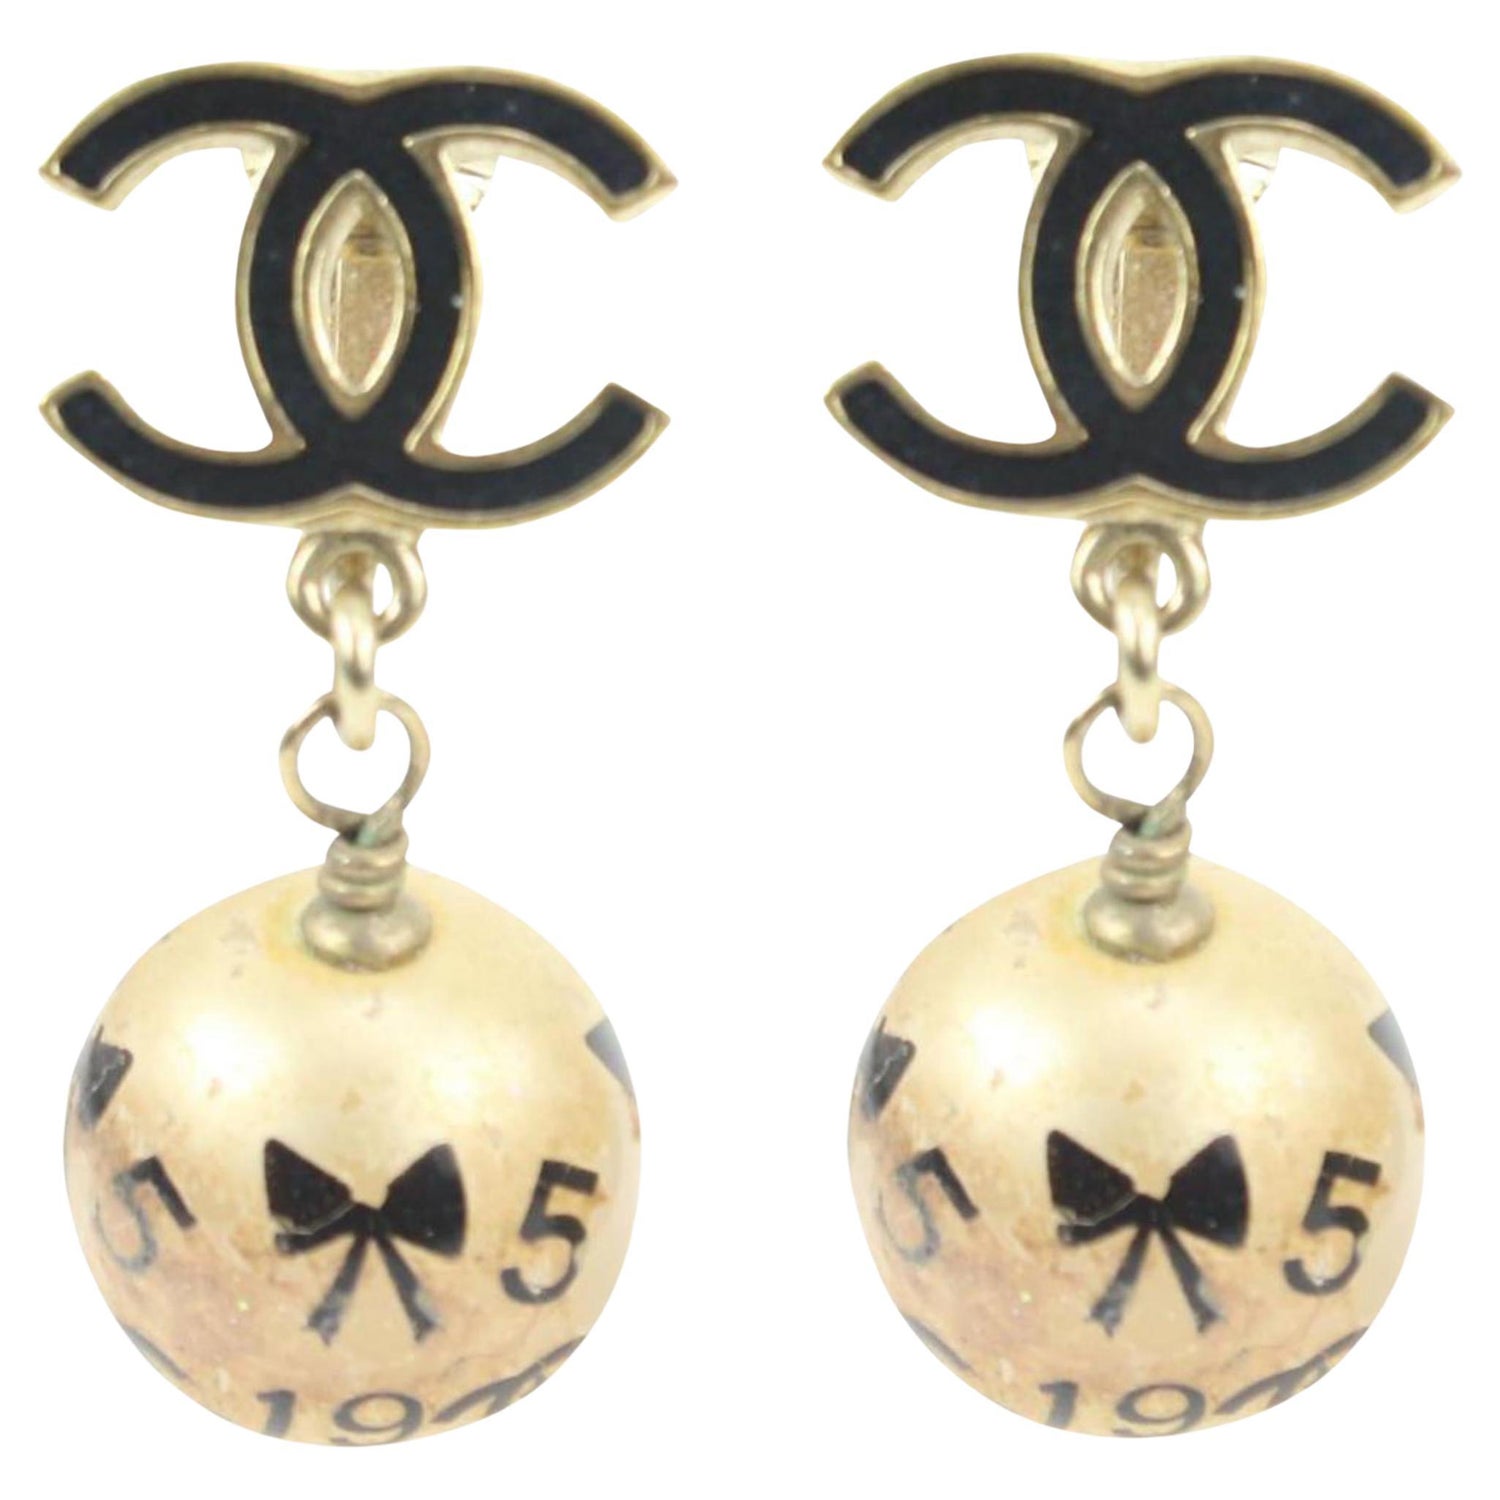 Chanel 98A Clothes Pin Brooch Clip 1014c17